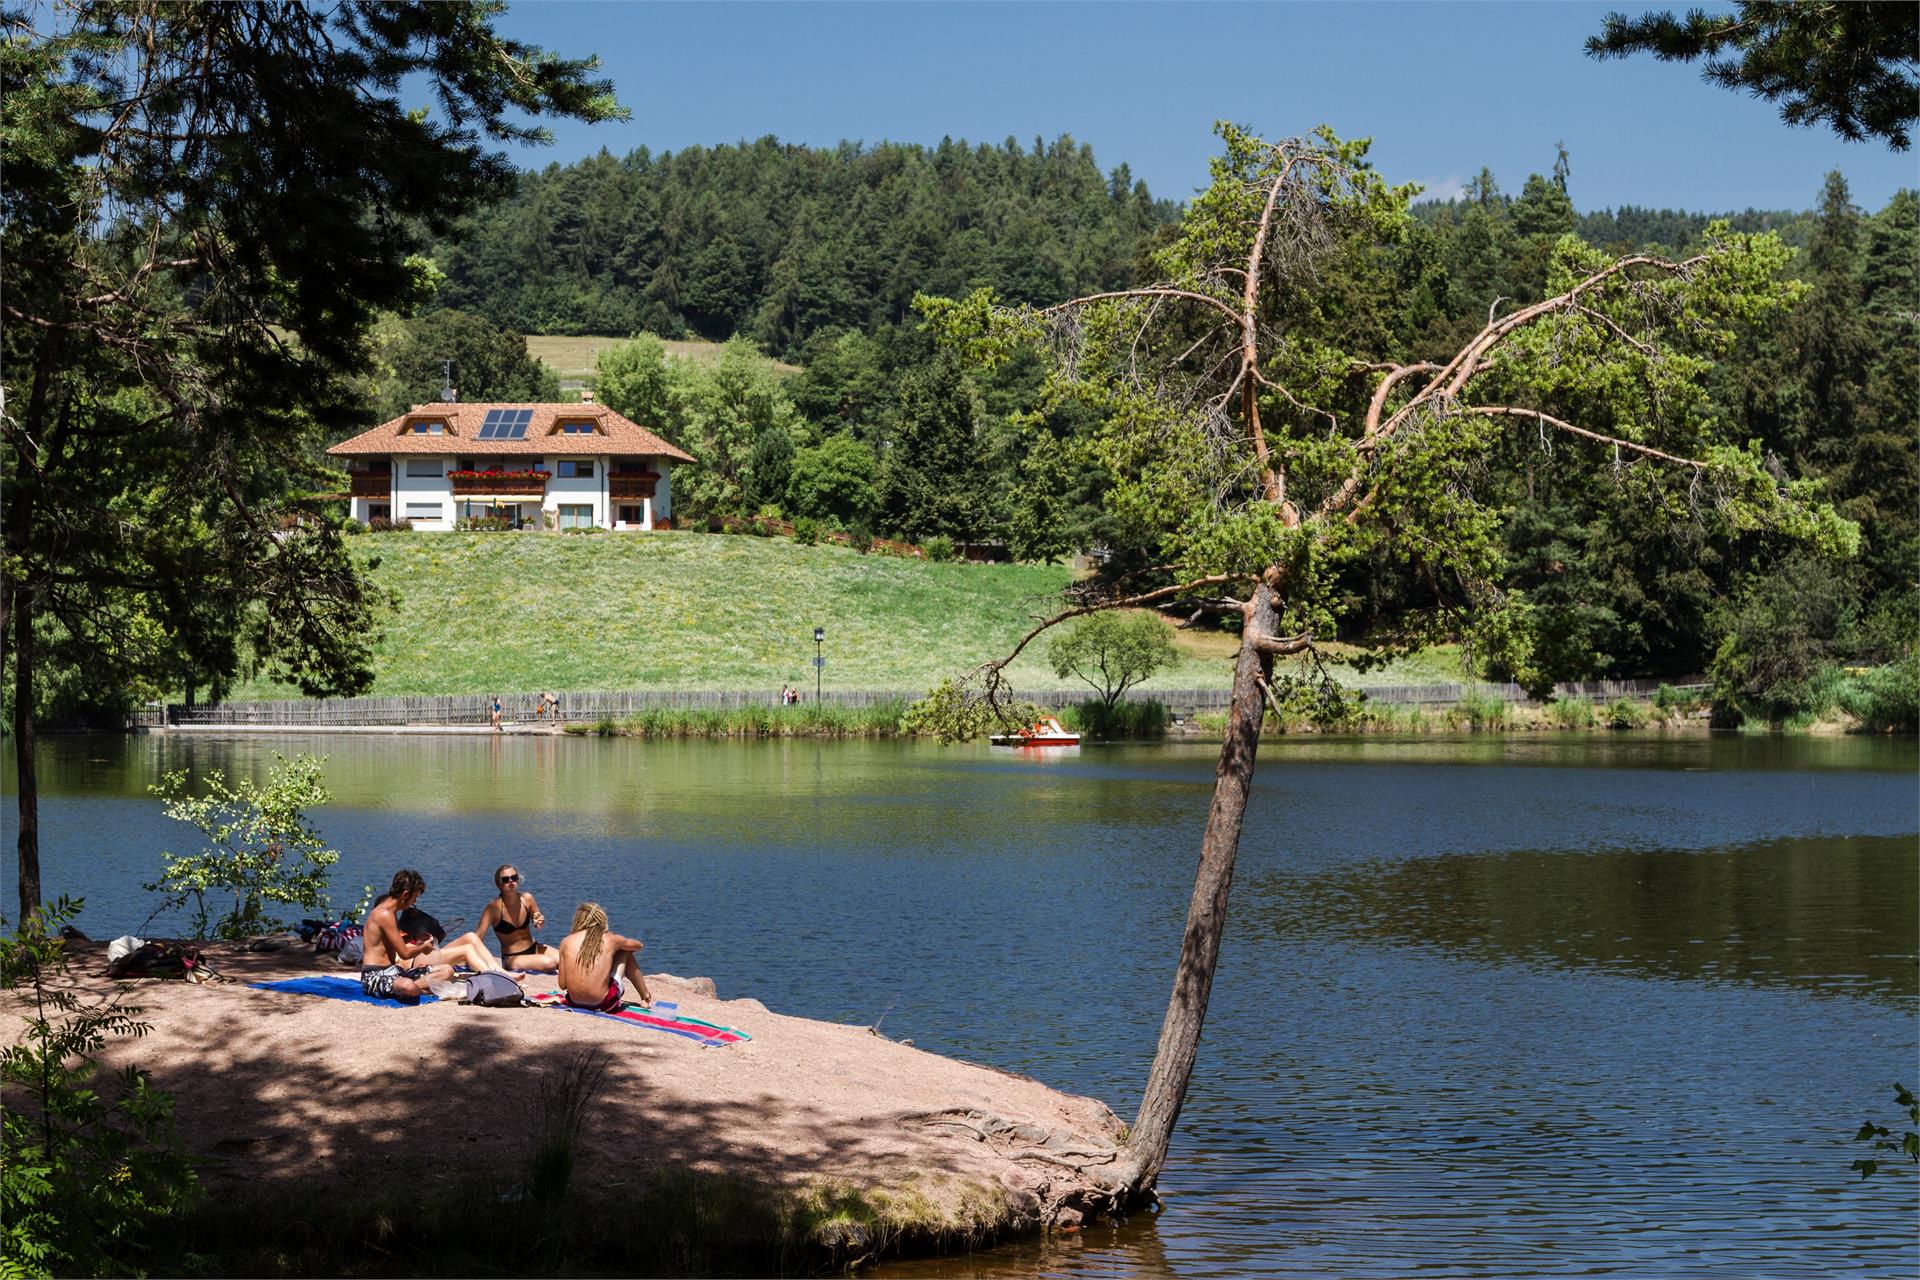 The Costalovara/Wolfsgruben bathing lake